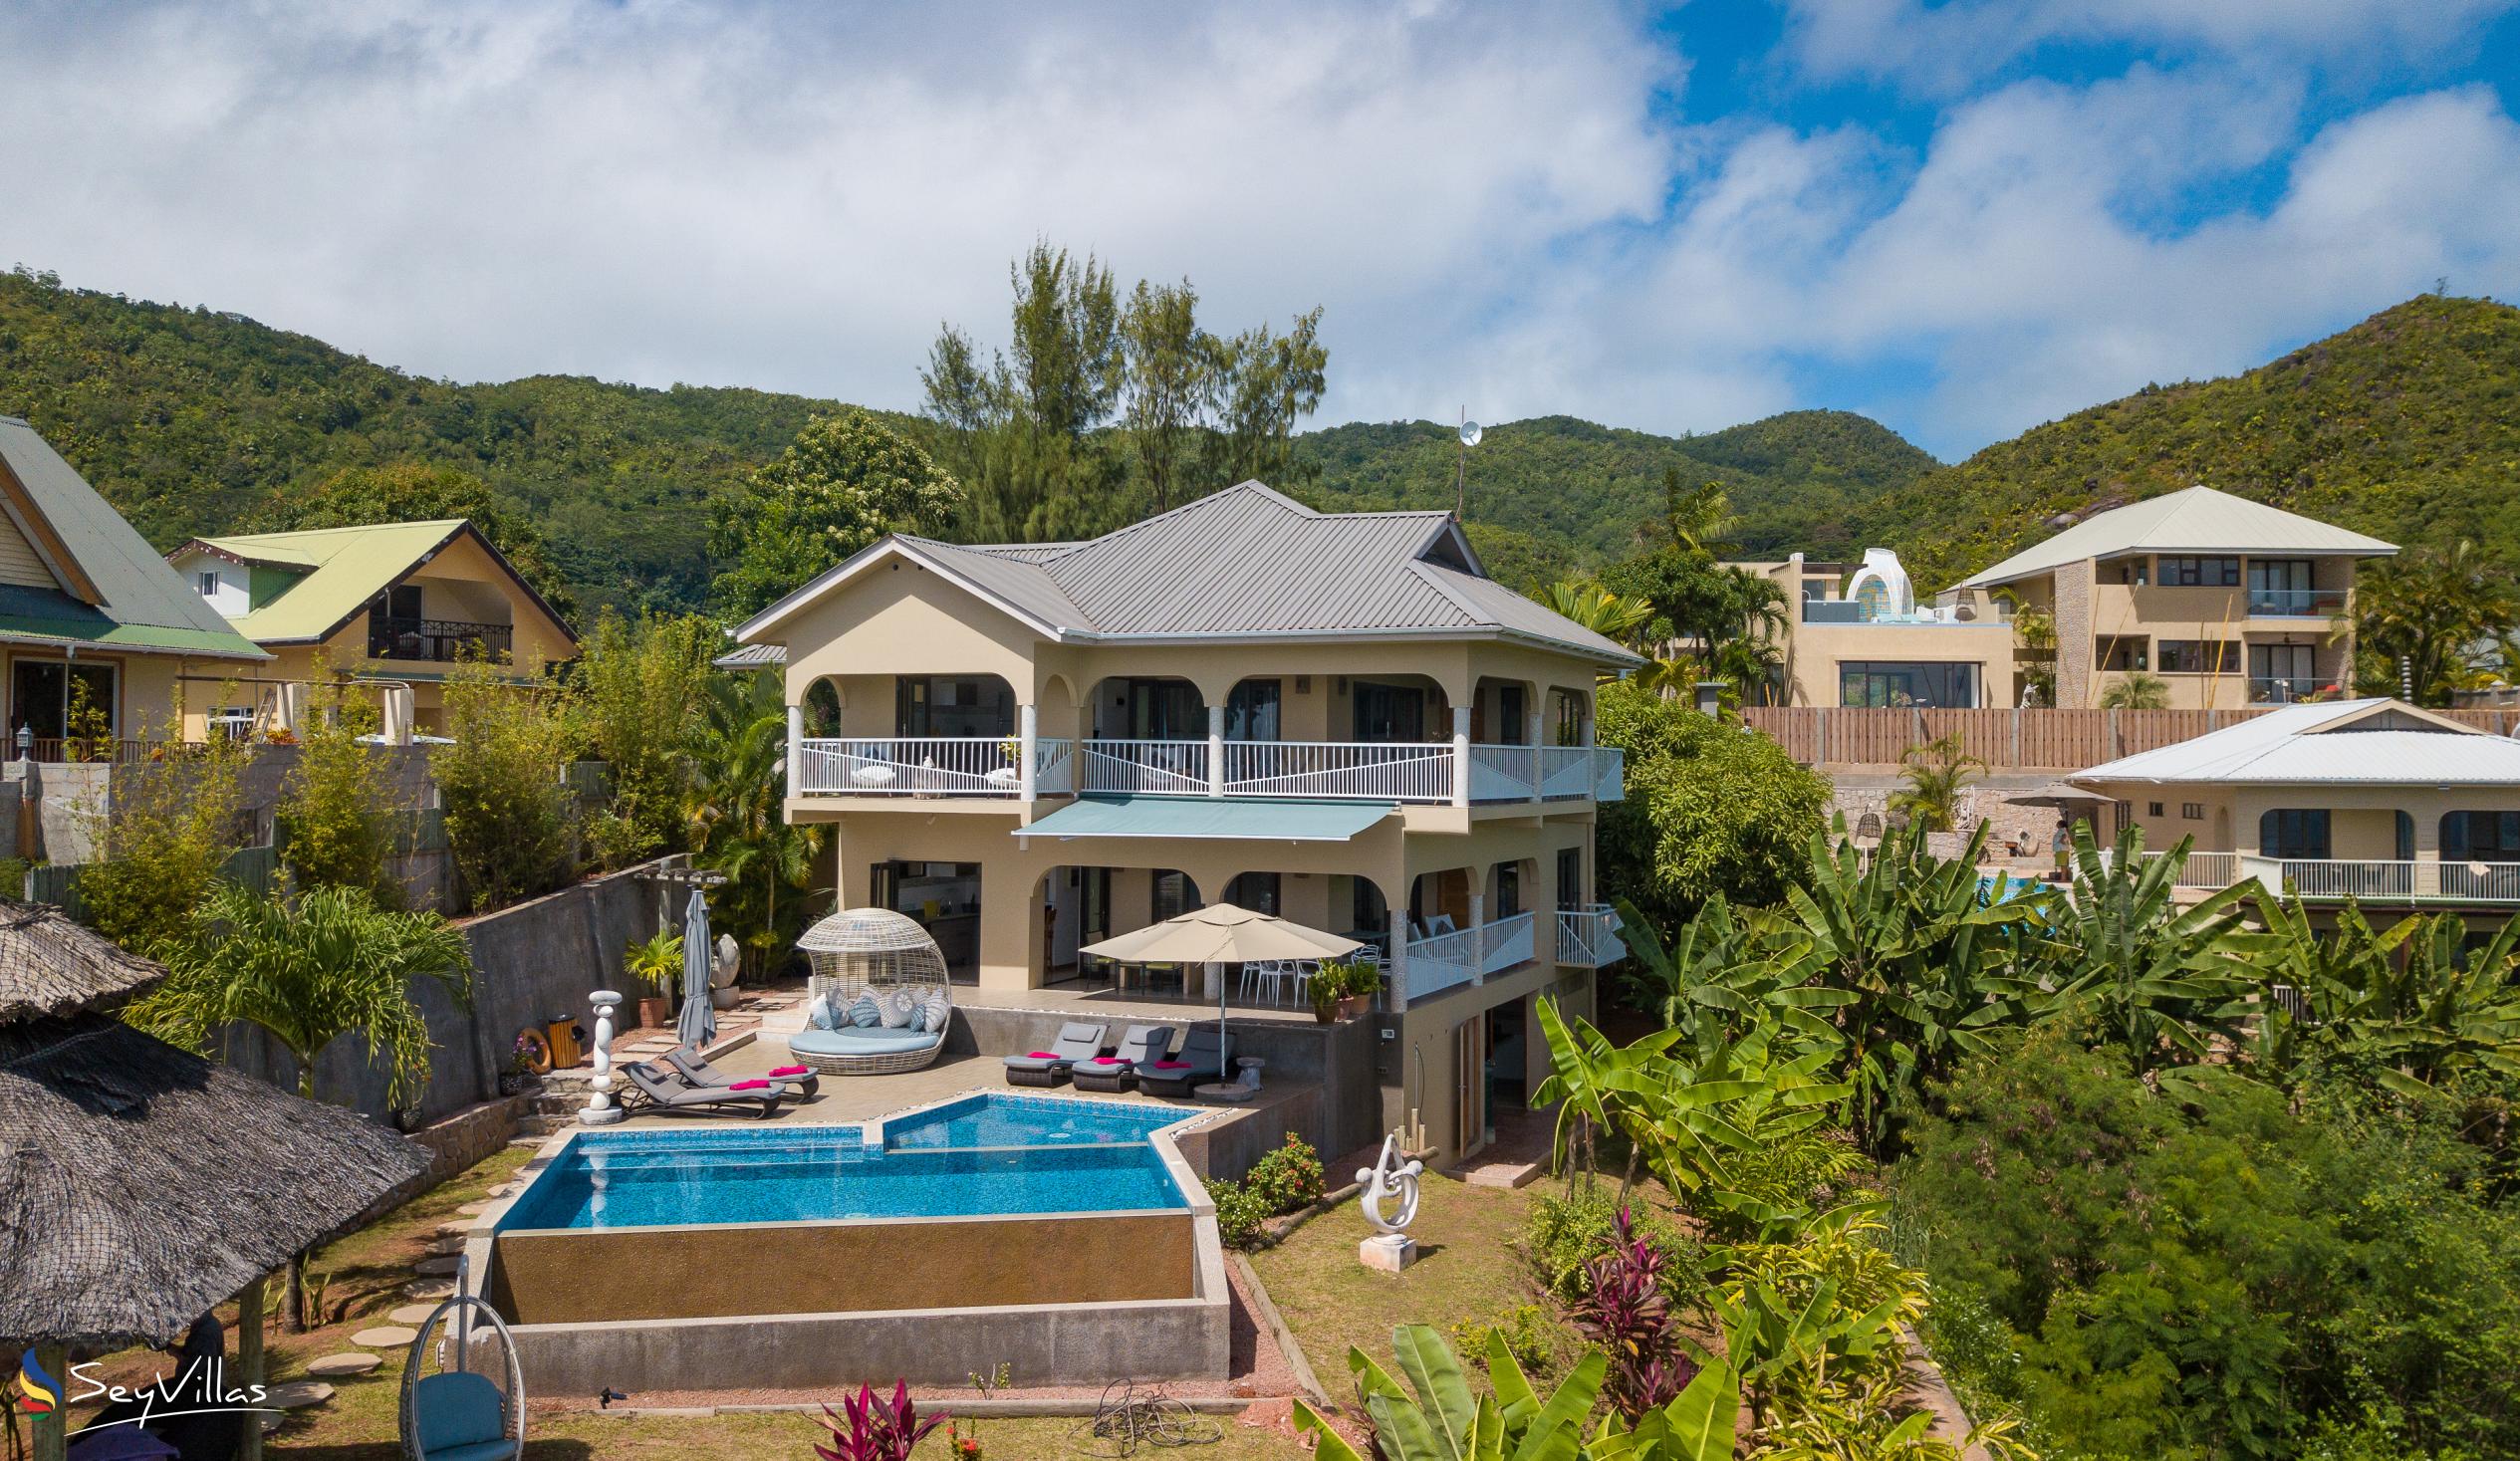 Foto 53: Le Duc de Praslin Hillside Villas - Villa 270° - Praslin (Seychellen)